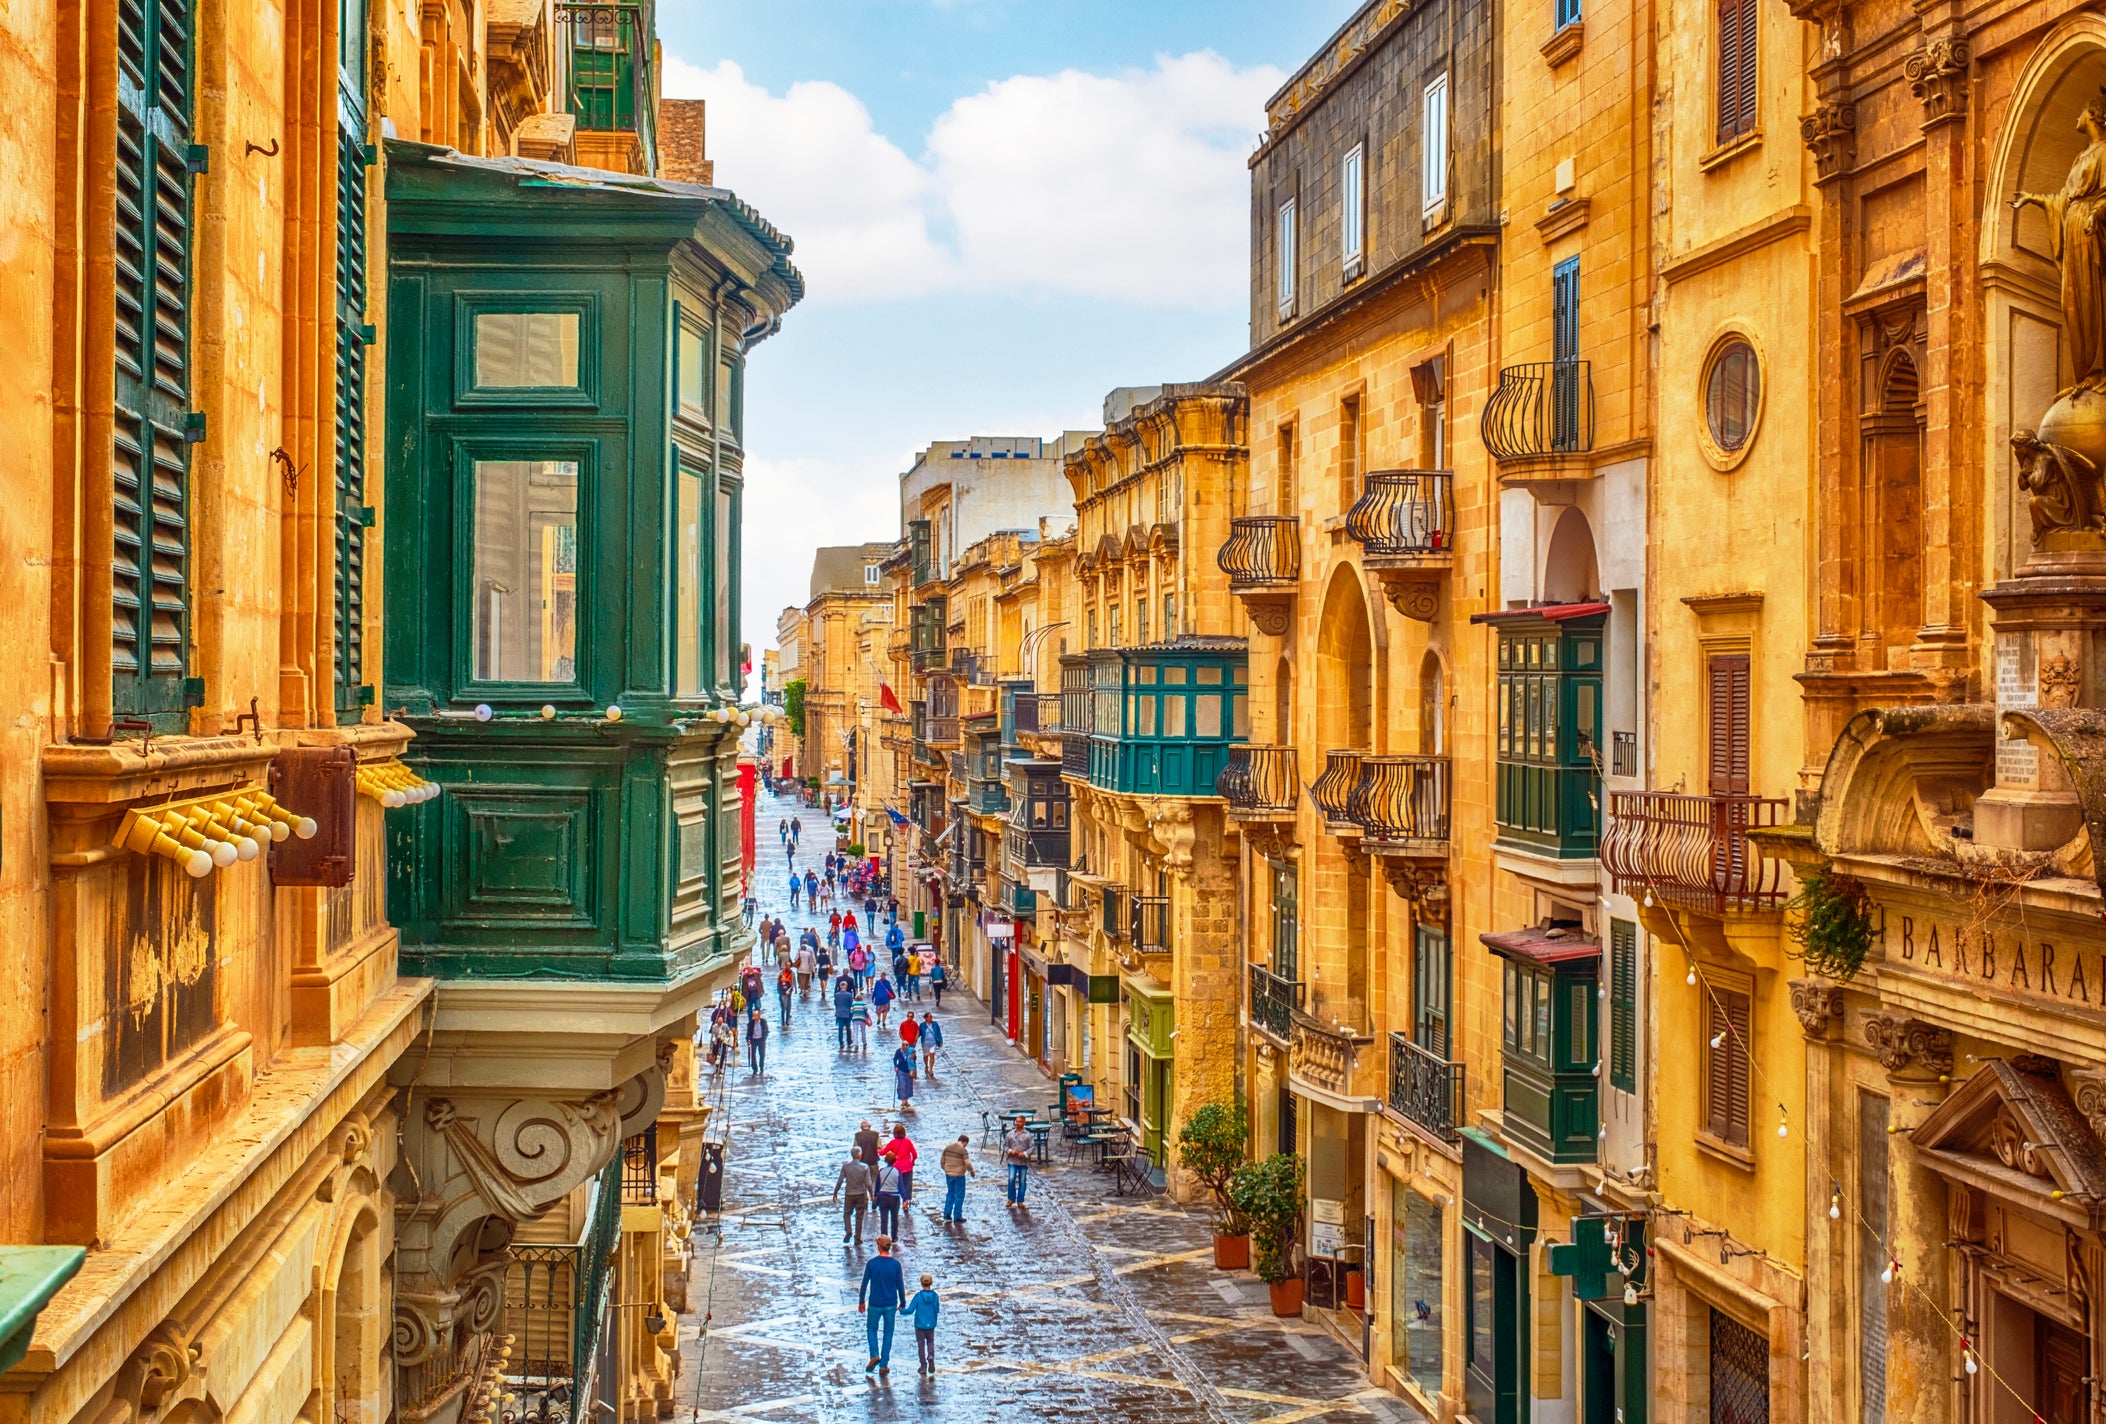 Valletta’s 1km long main street runs from the city gates to Fort St Elmo